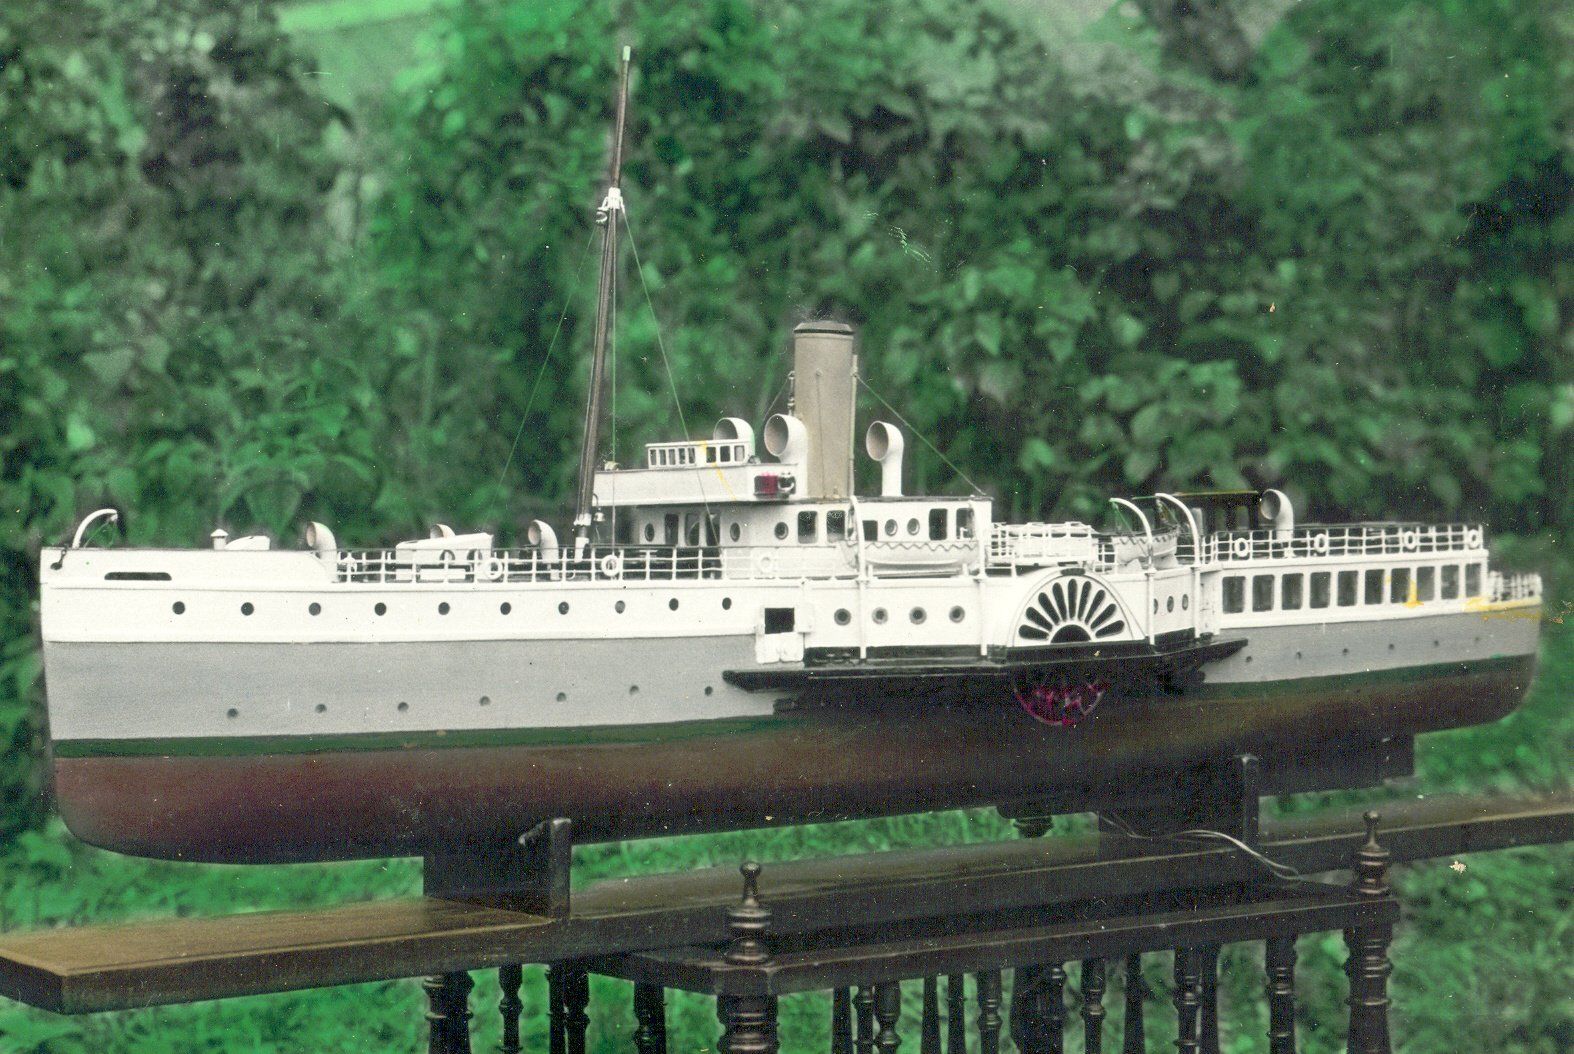 Model Steam Boat built by Tom Peckham's Dad